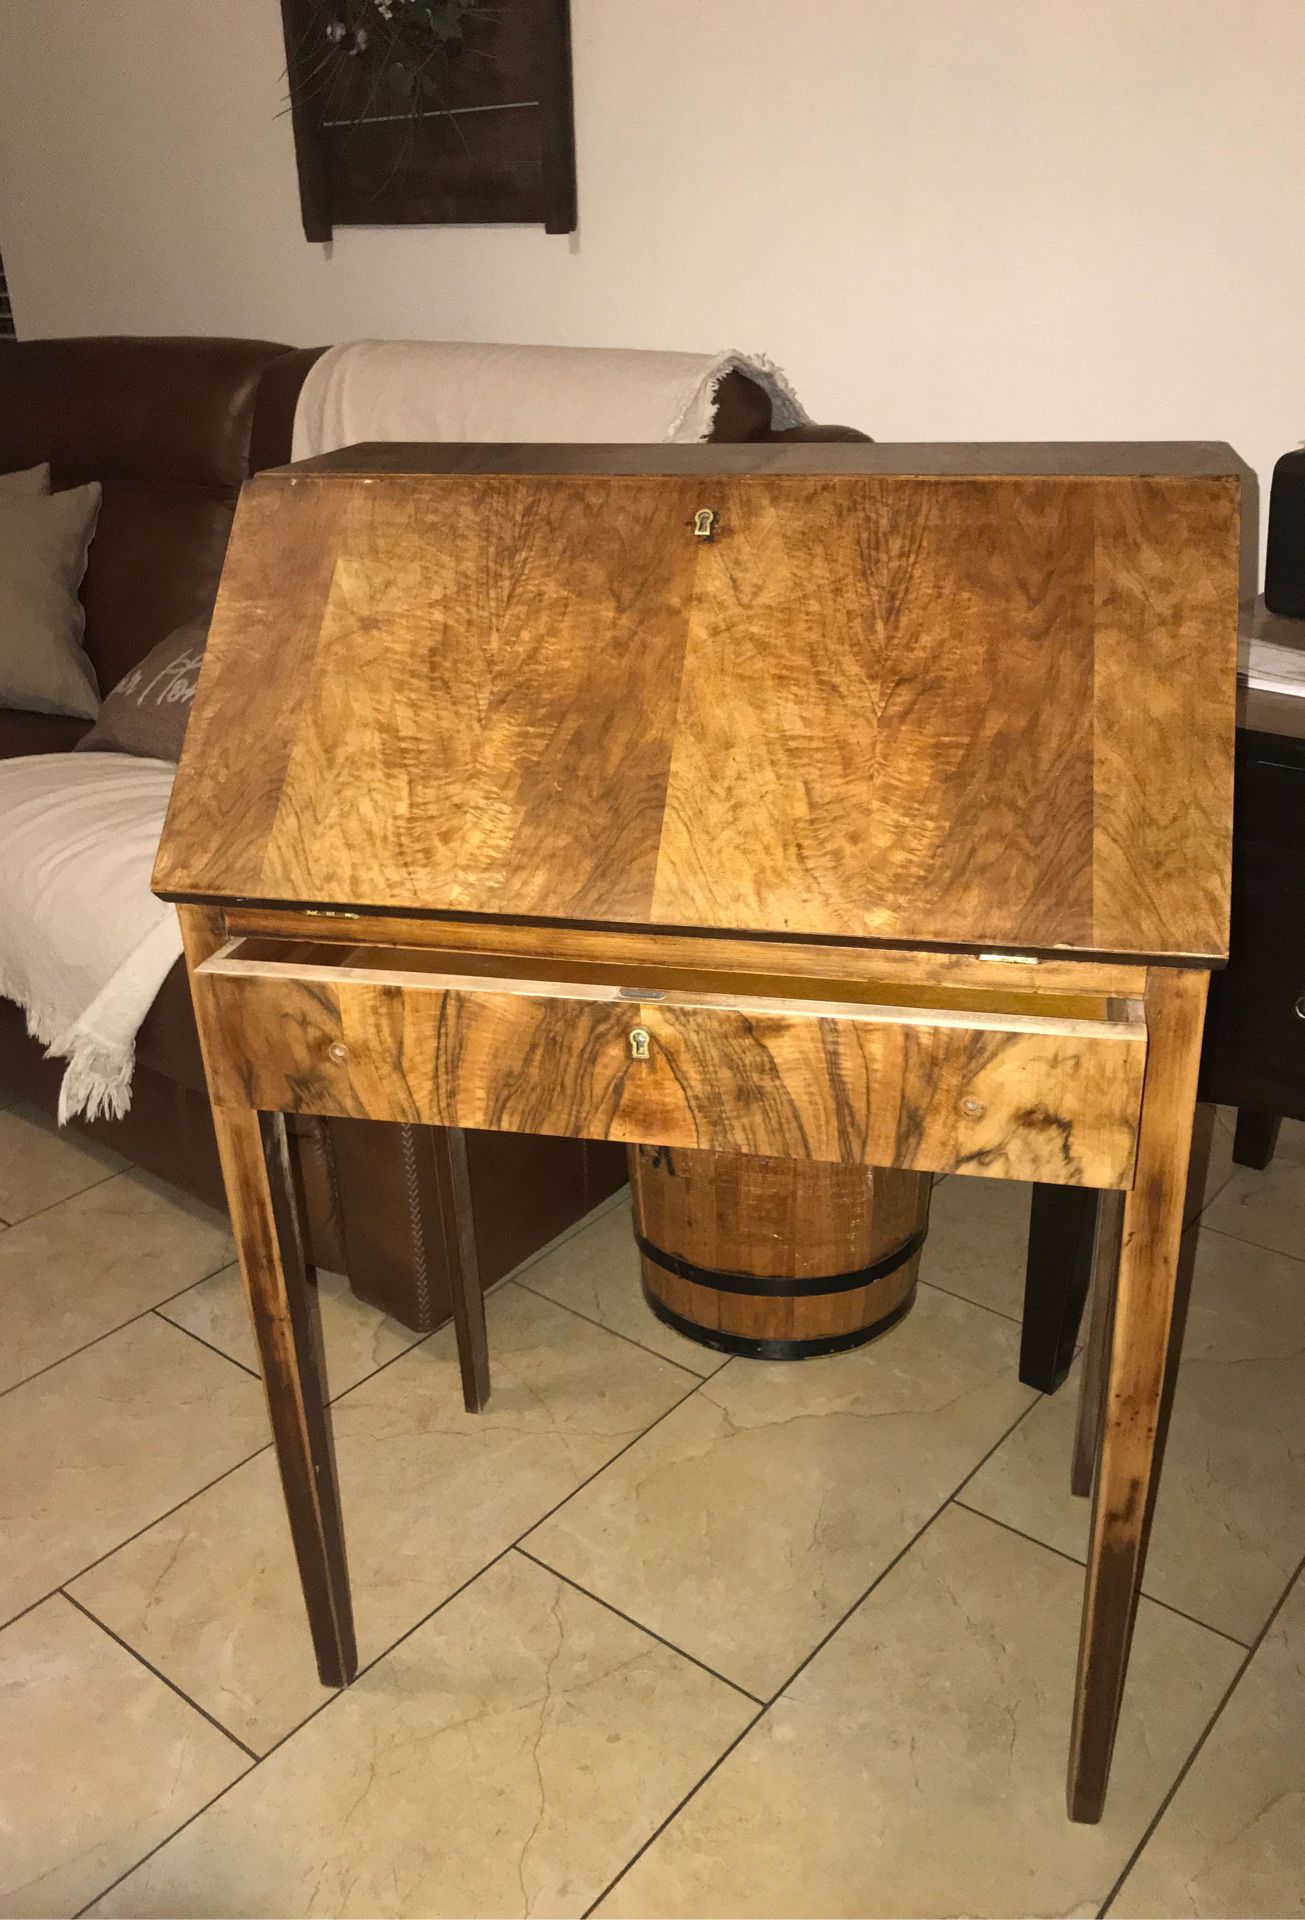 Old rustic antique Desk